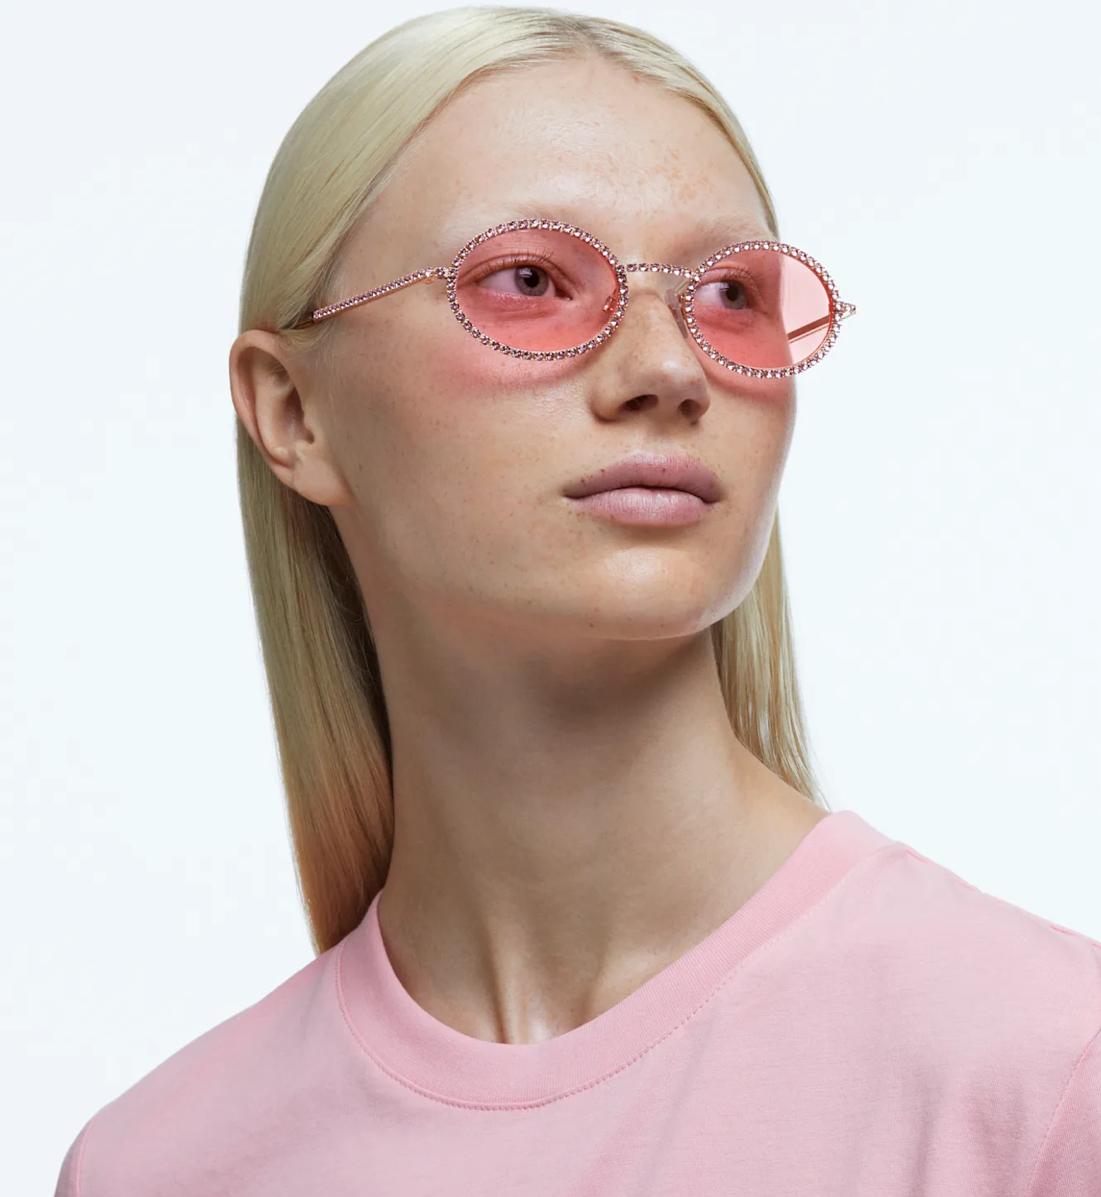 Swarovski - oval crystal sunglasses - pink